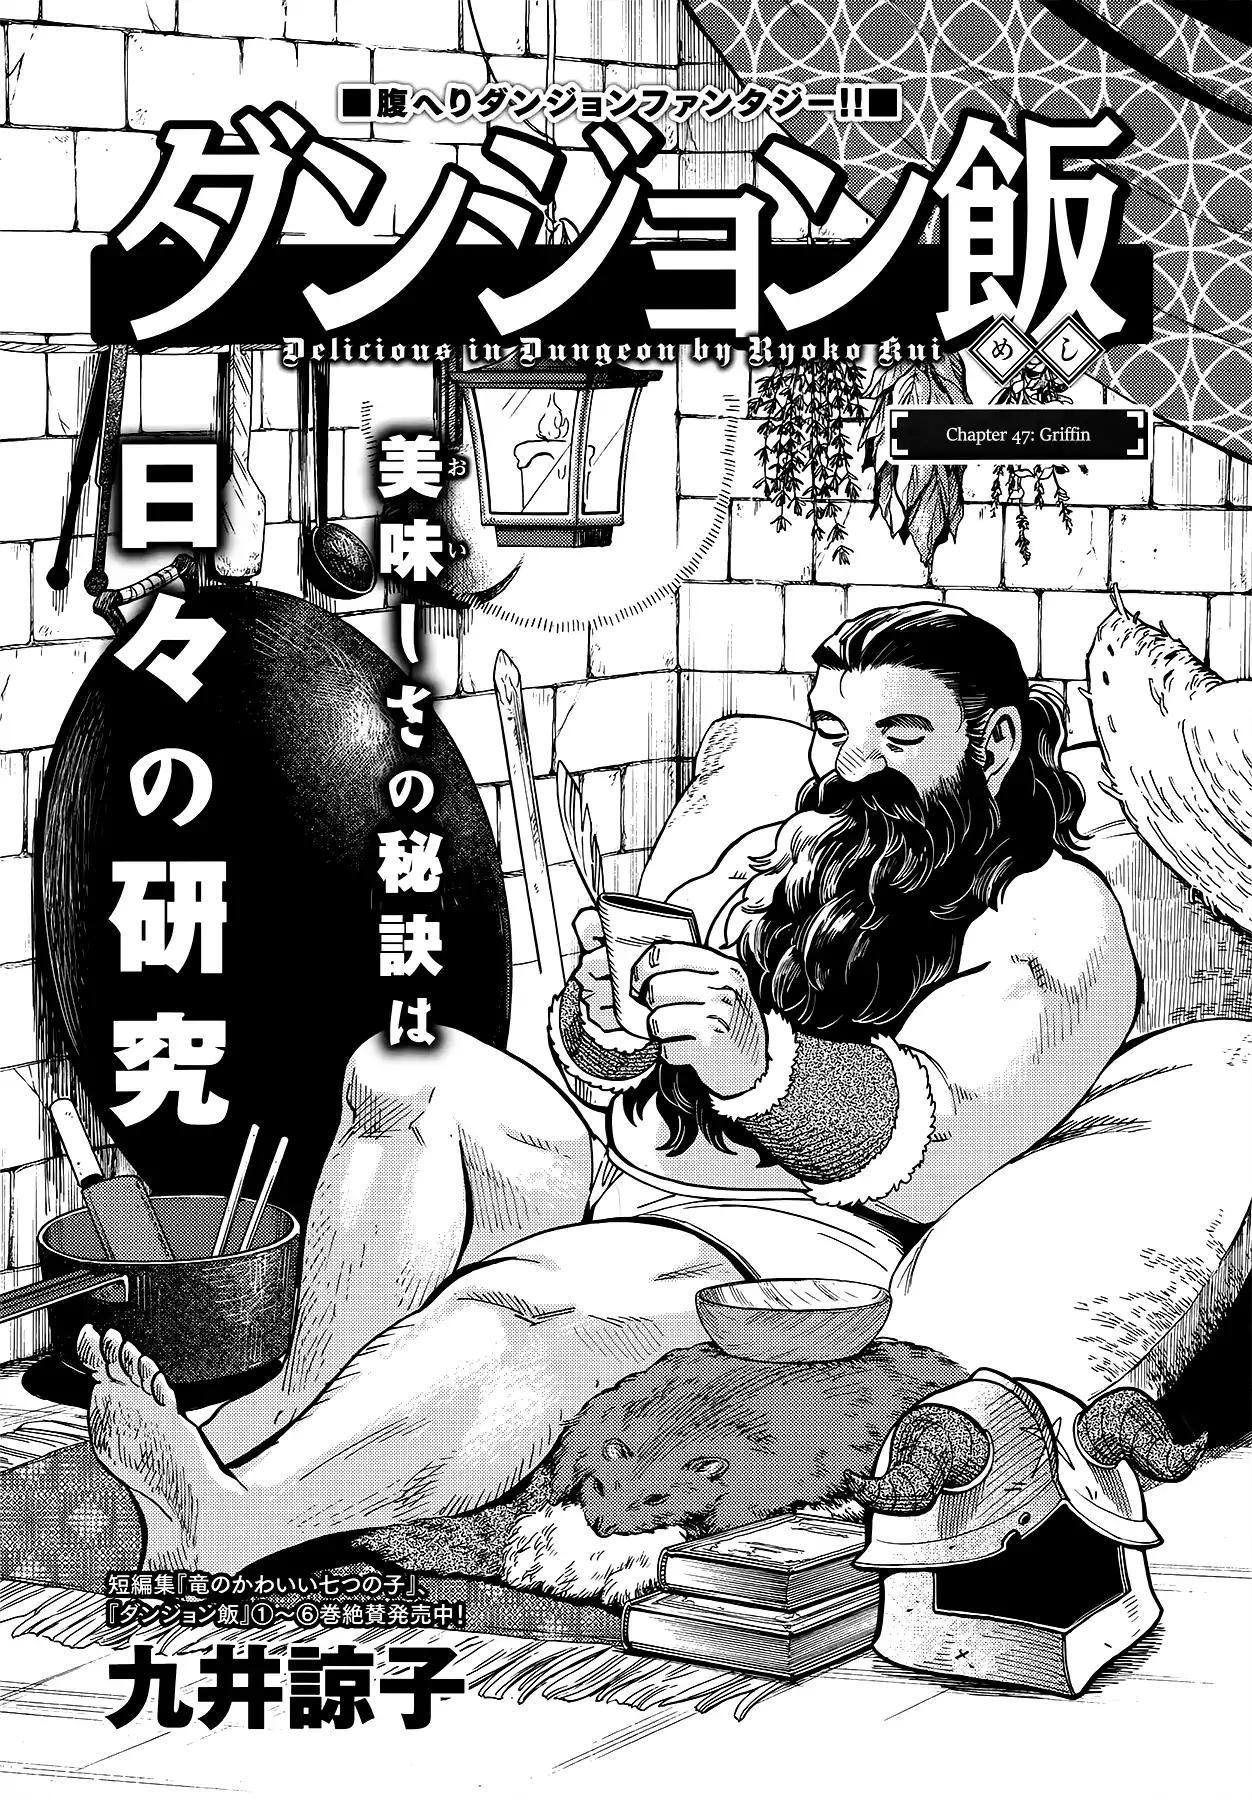 Dungeon Meshi Chapter 47 page 1 - Mangakakalot